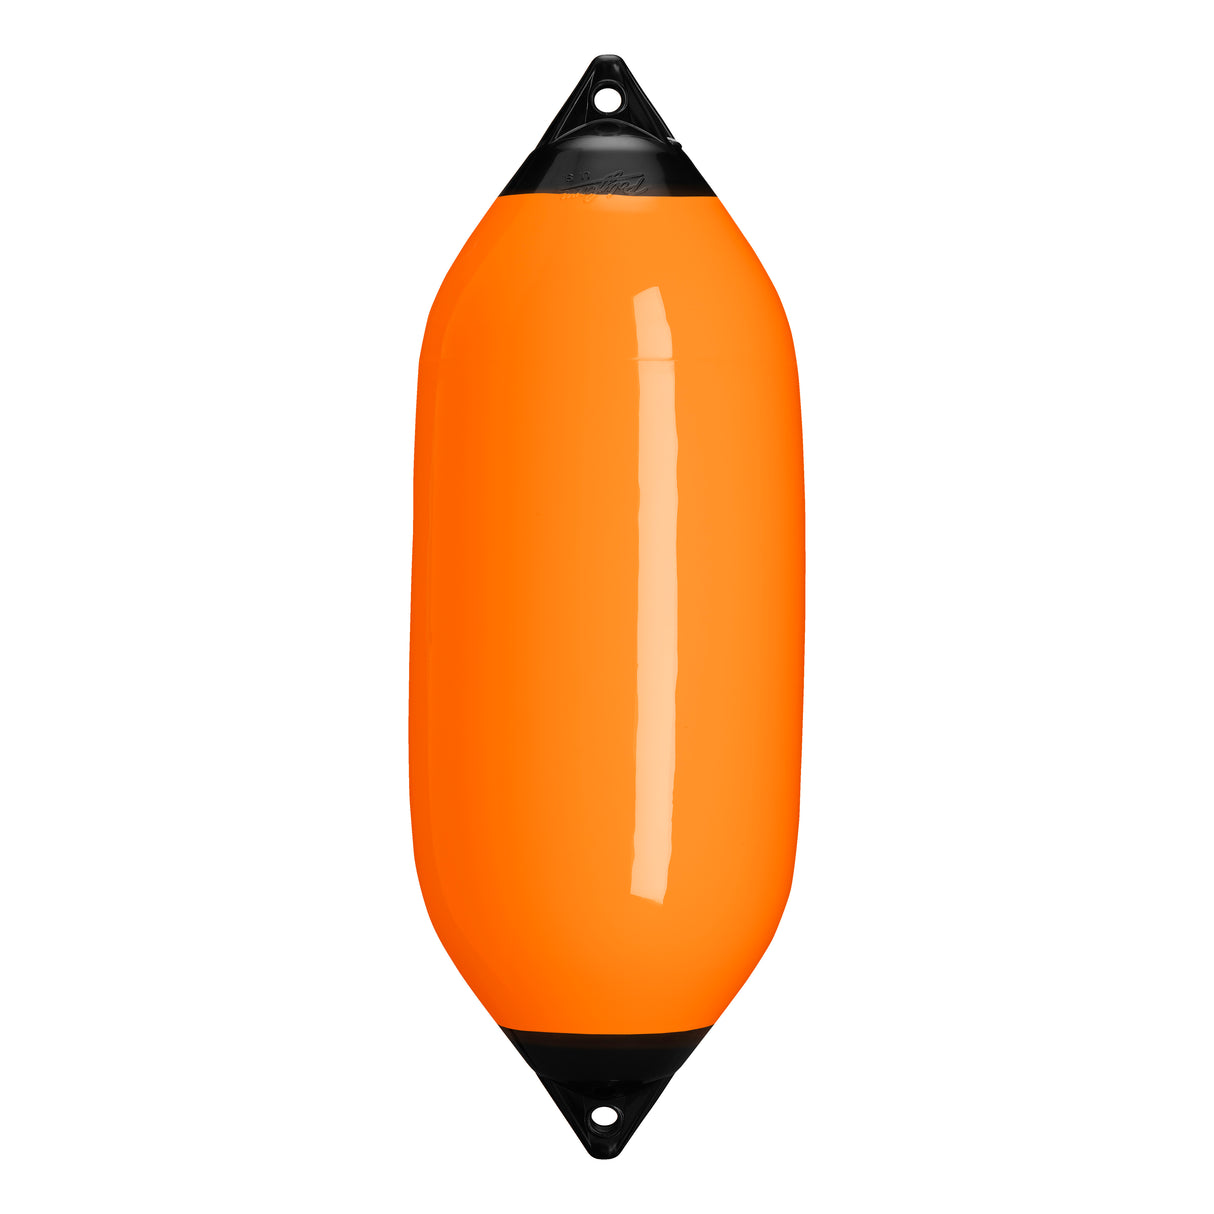 Orange boat fender with Black-Top, Polyform F-7